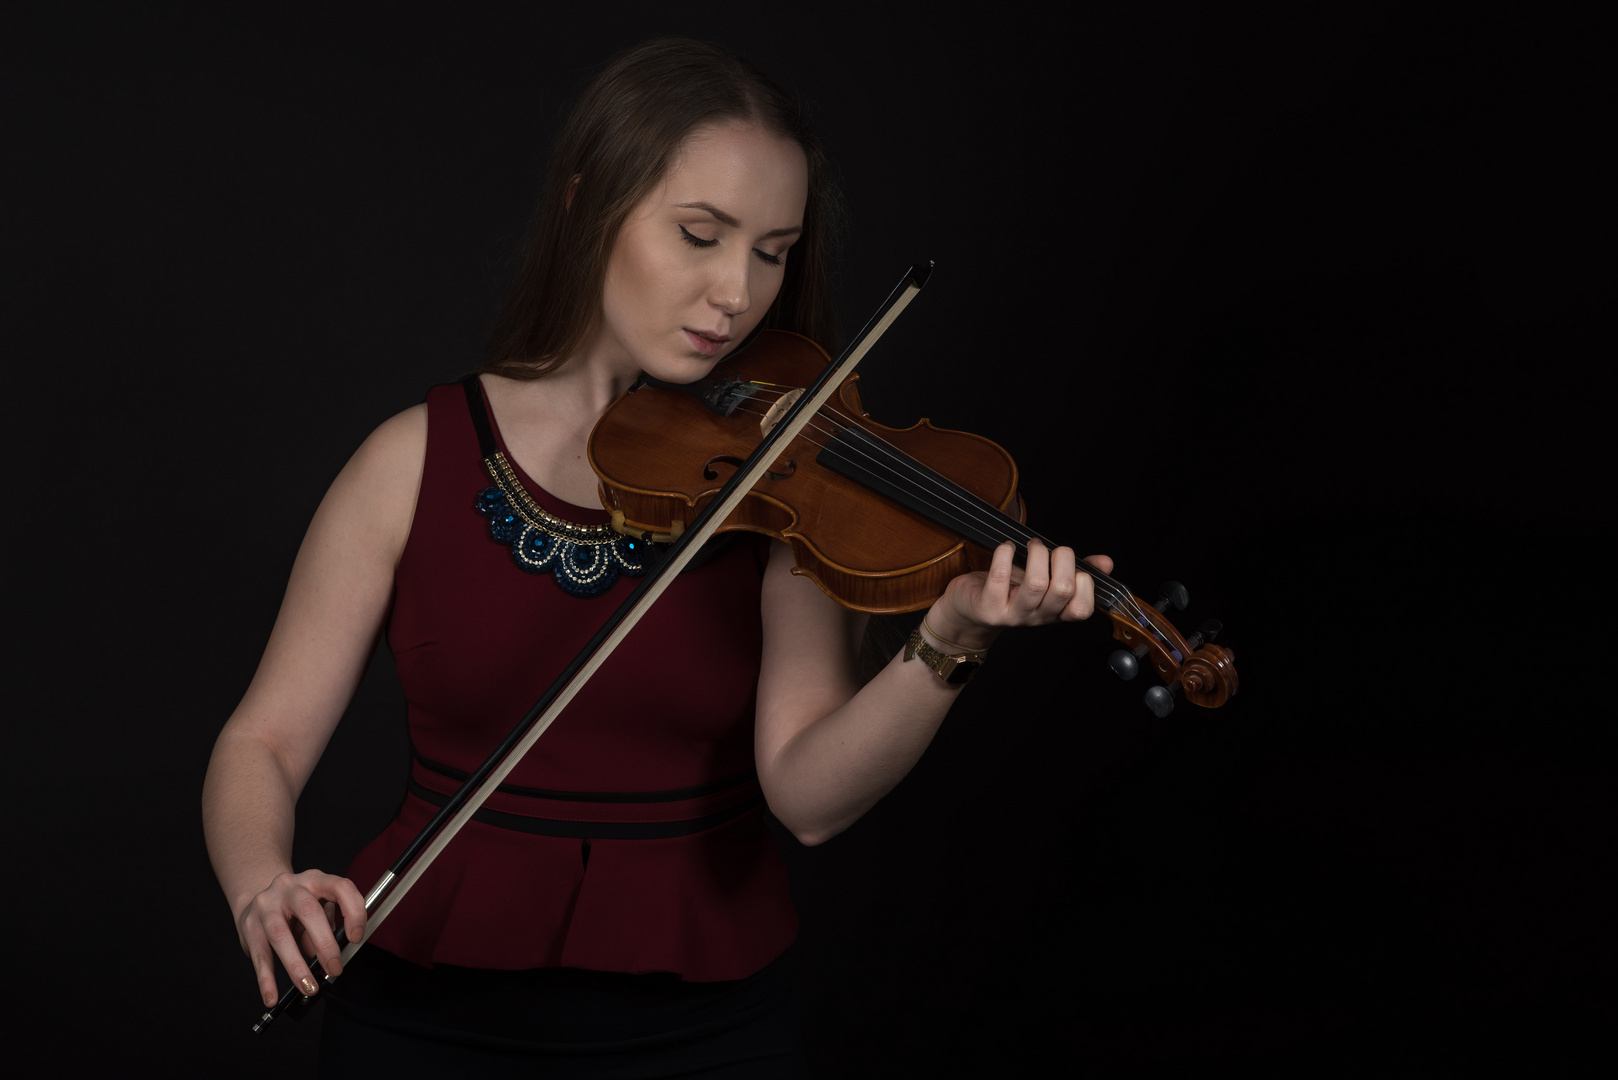 Viktoria play's violin